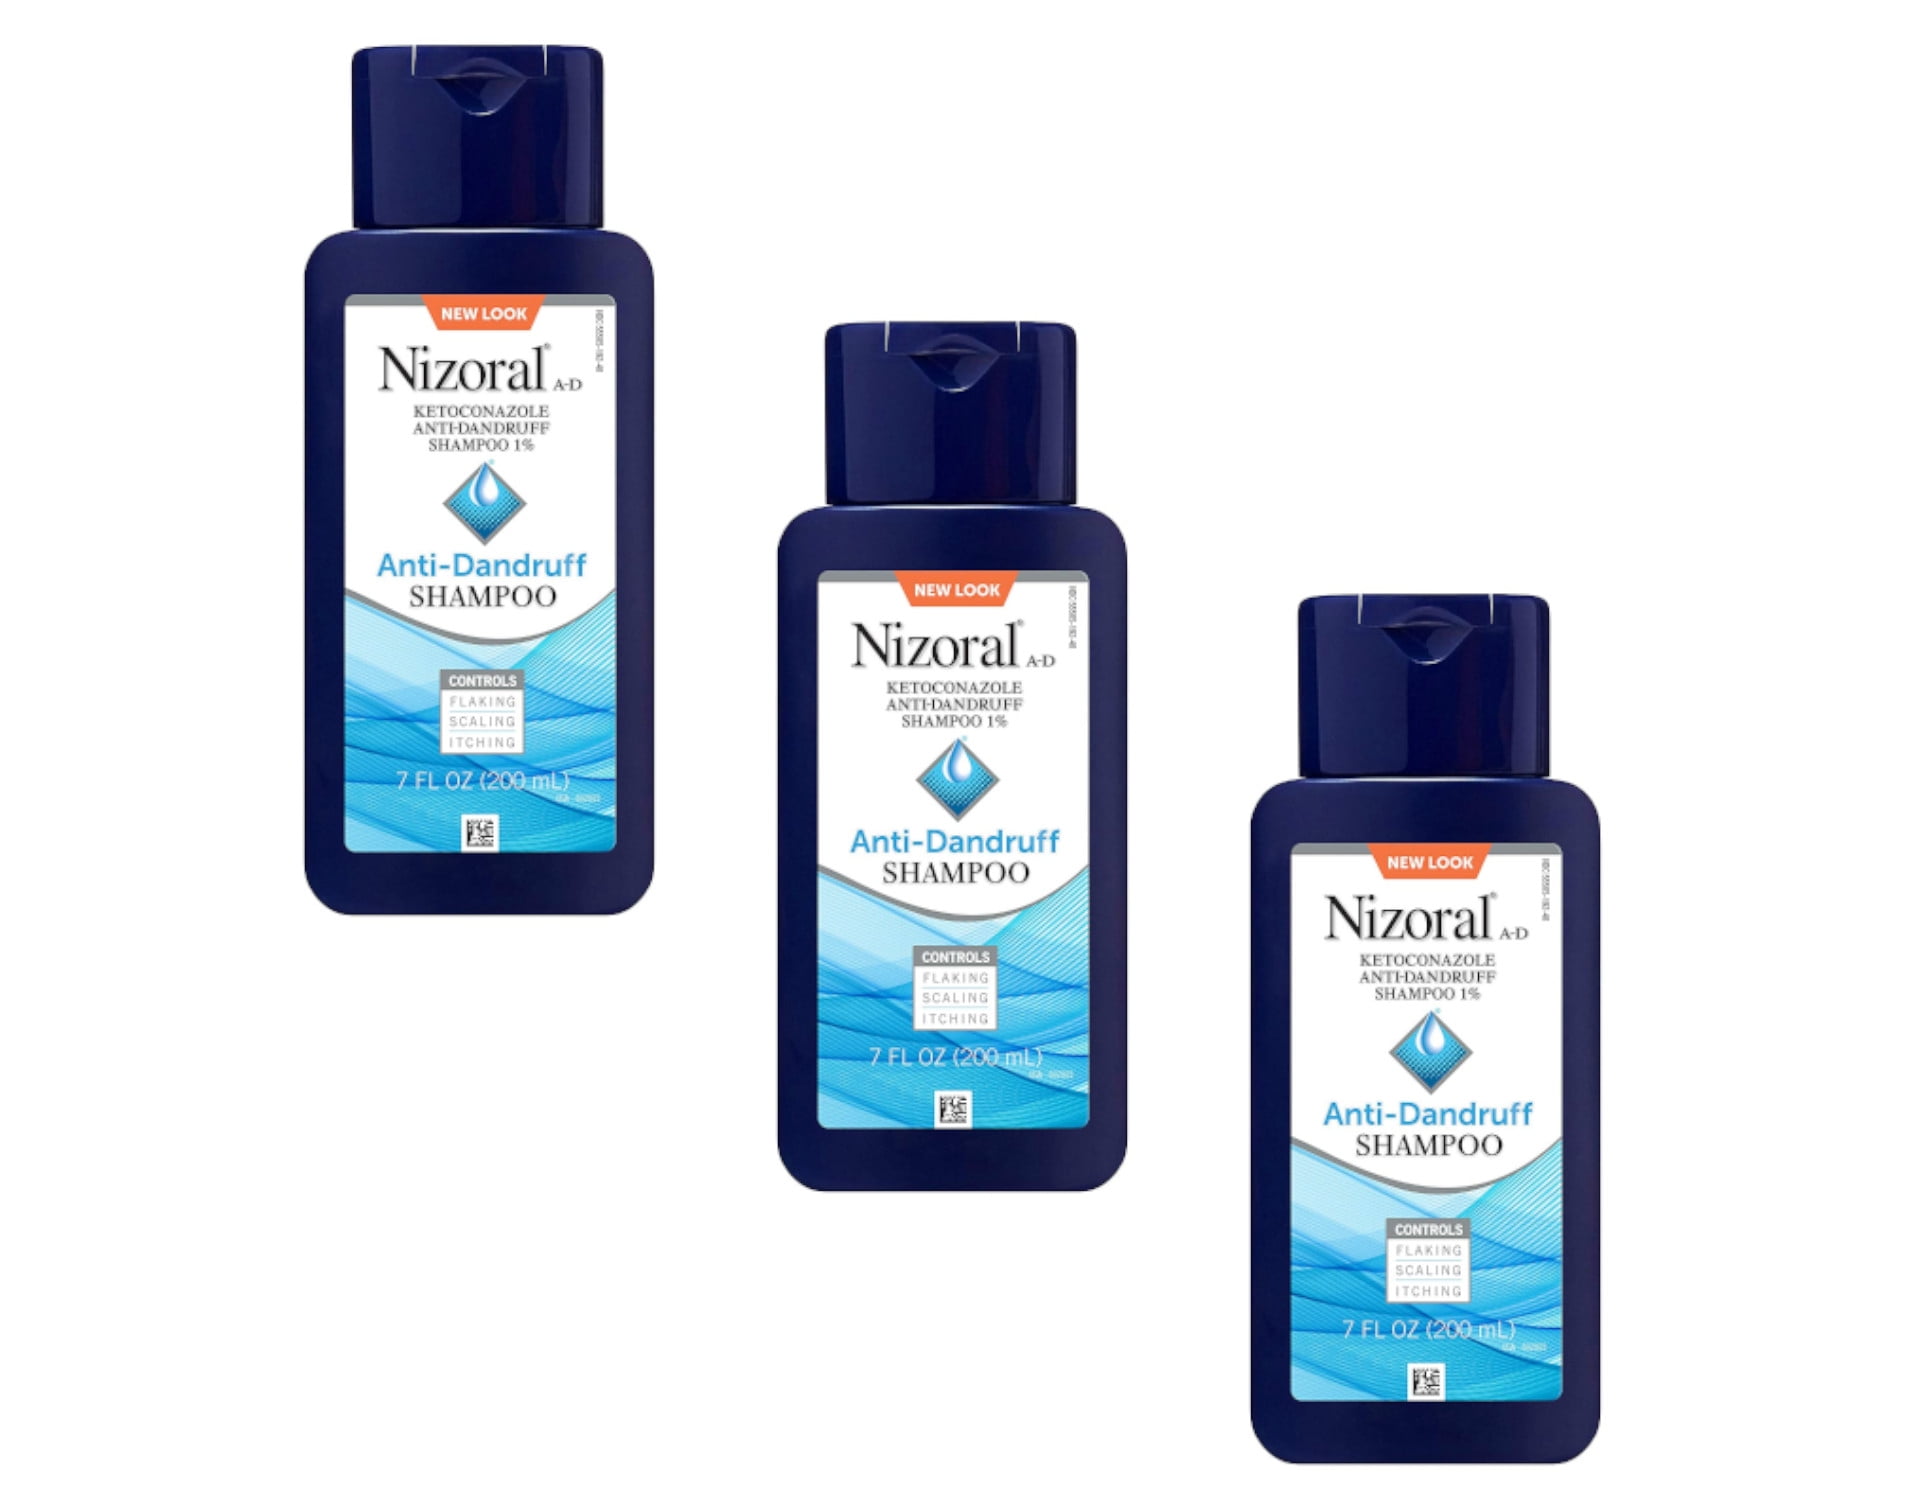 Pack Nizoral A-D Anti-Dandruff Ketoconazole 1% Shampoo - 7 oz (200 mL) - Walmart.com